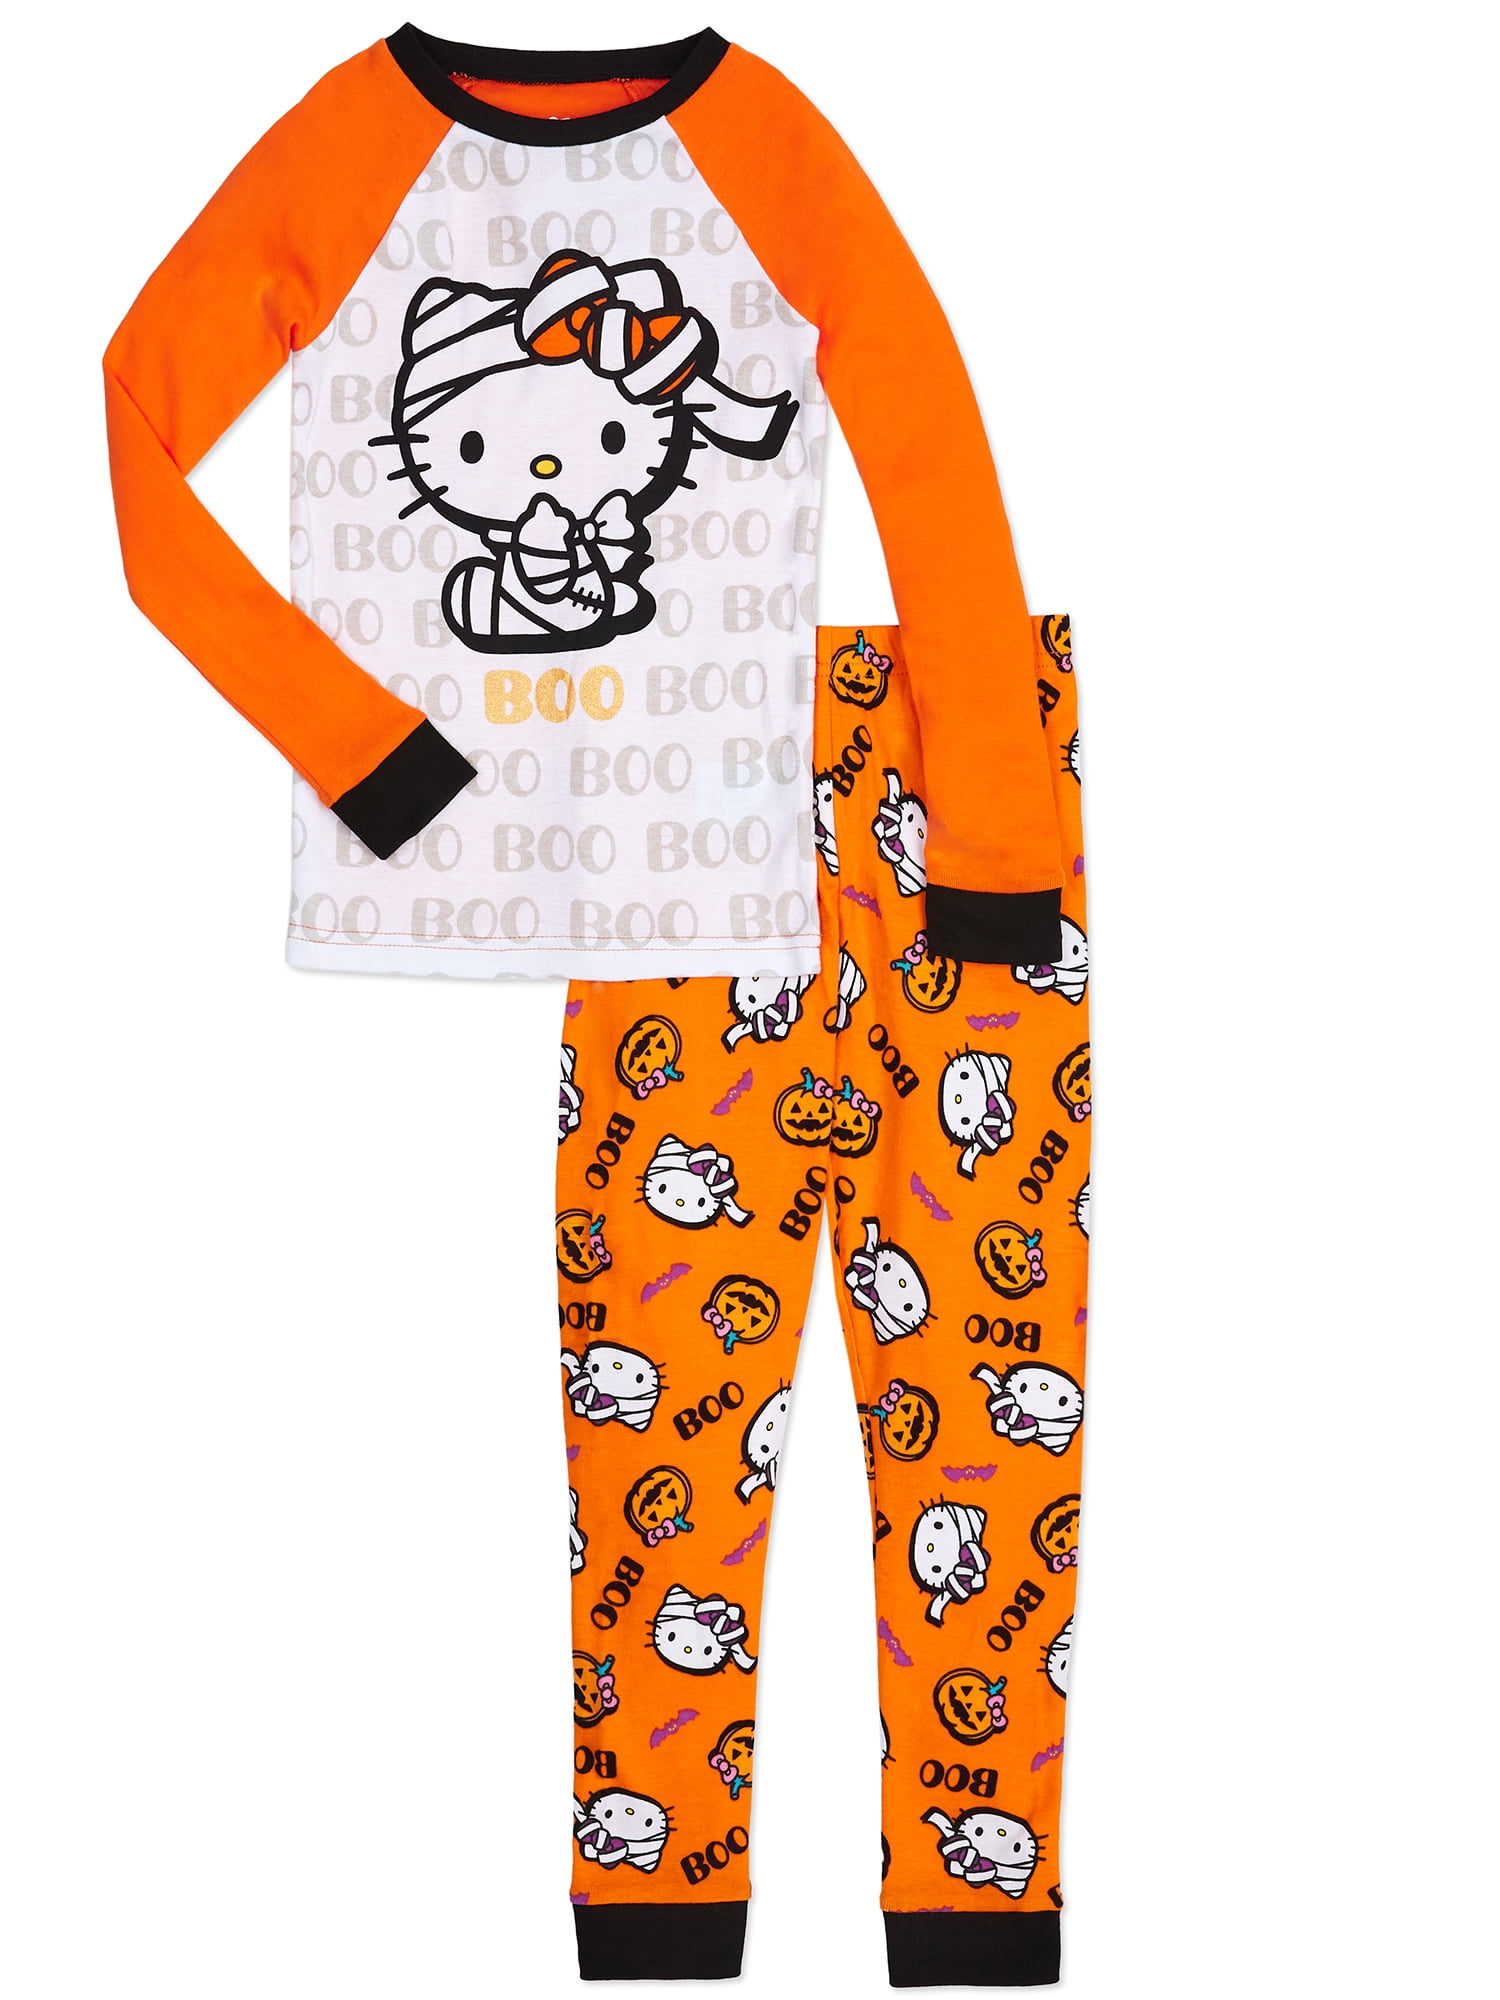 Hello Kitty Baby Girls' 4-Piece Cotton Pajama Set 